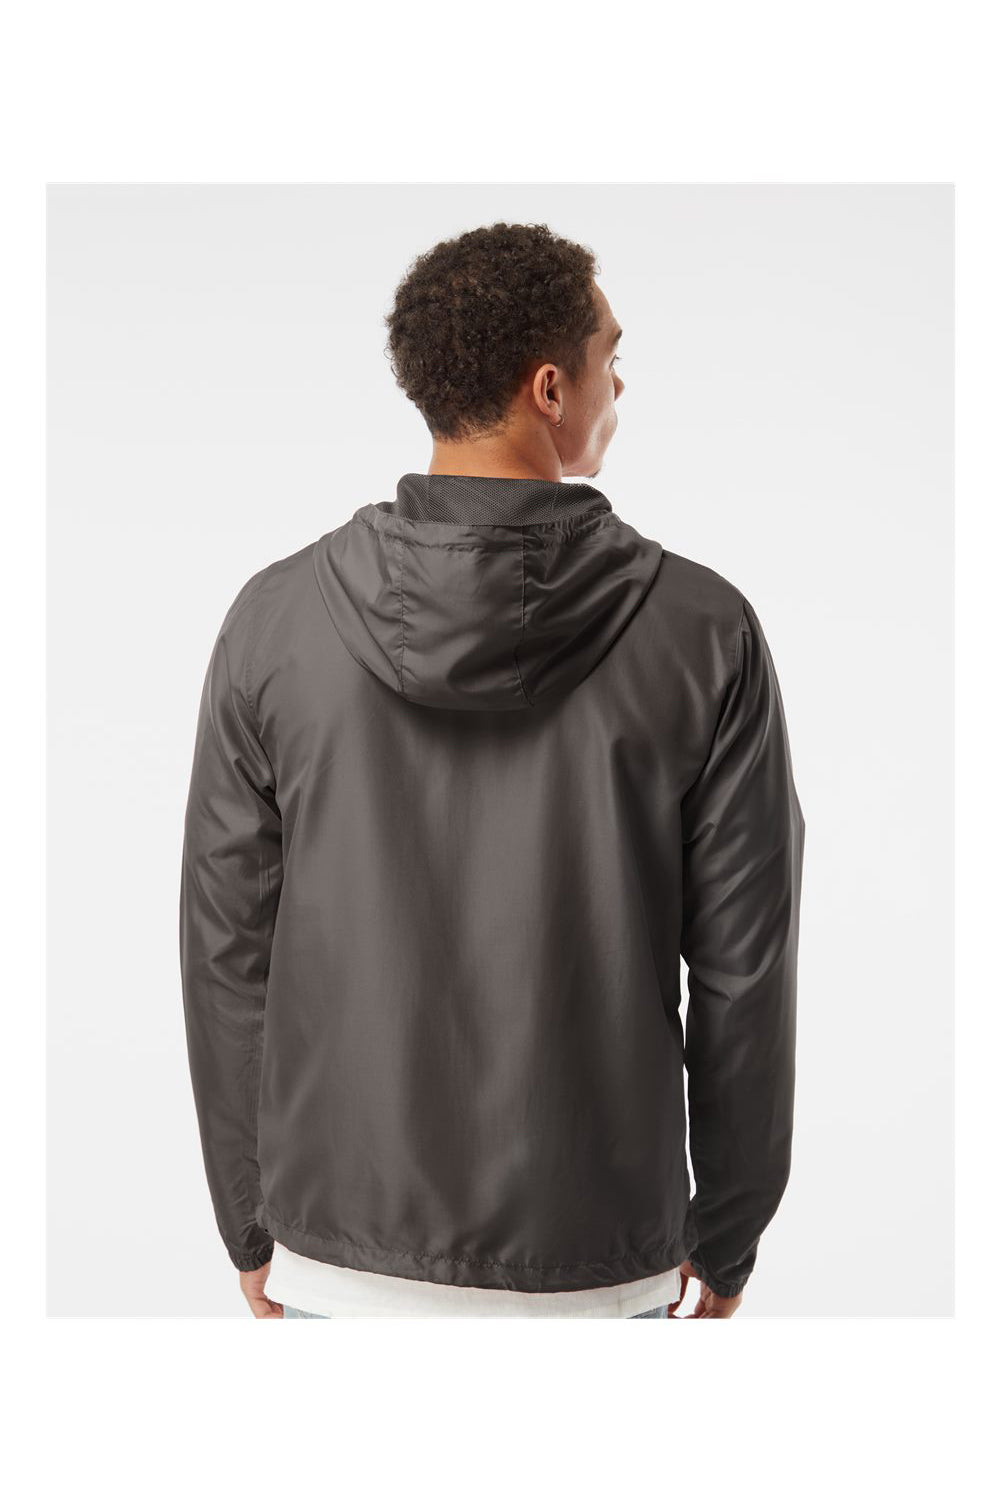 Independent Trading Co. EXP54LWZ Mens Full Zip Windbreaker Hooded Jacket Graphite Grey Model Back